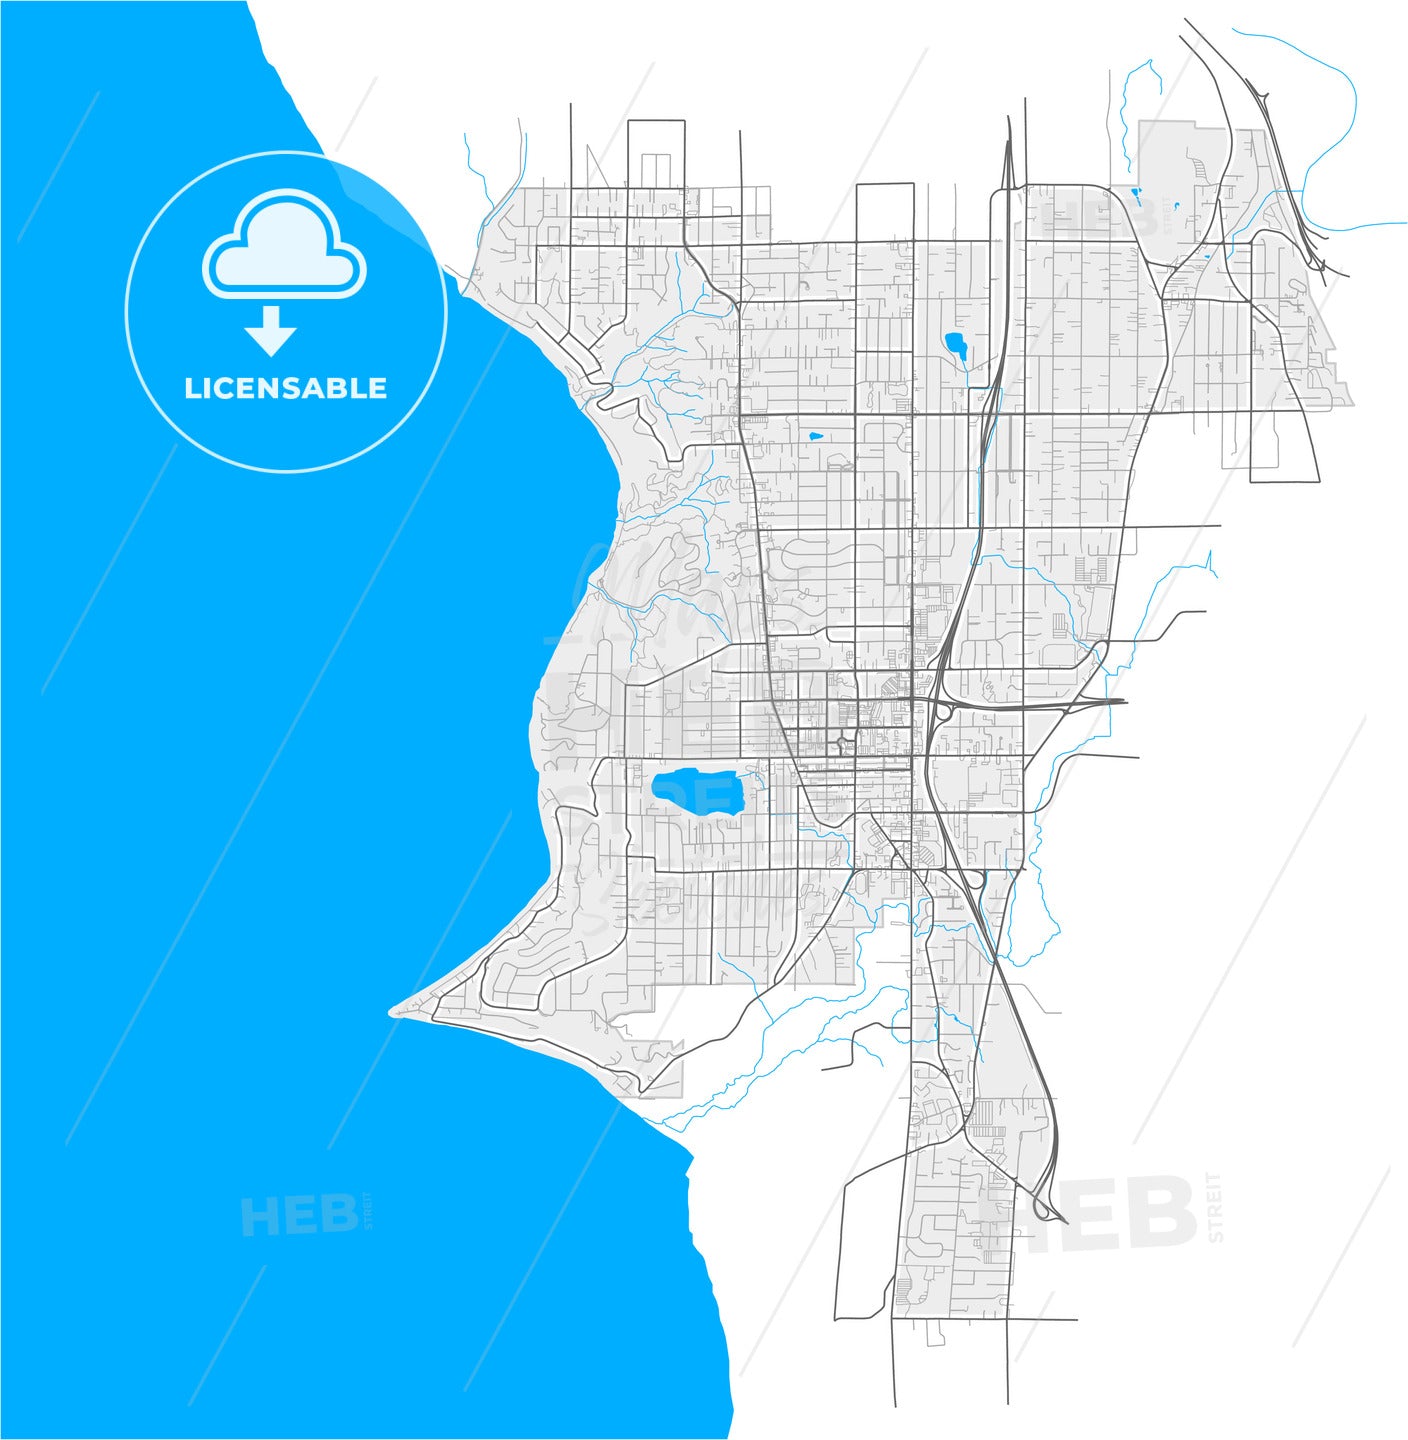 Burien, Washington, United States, high quality vector map